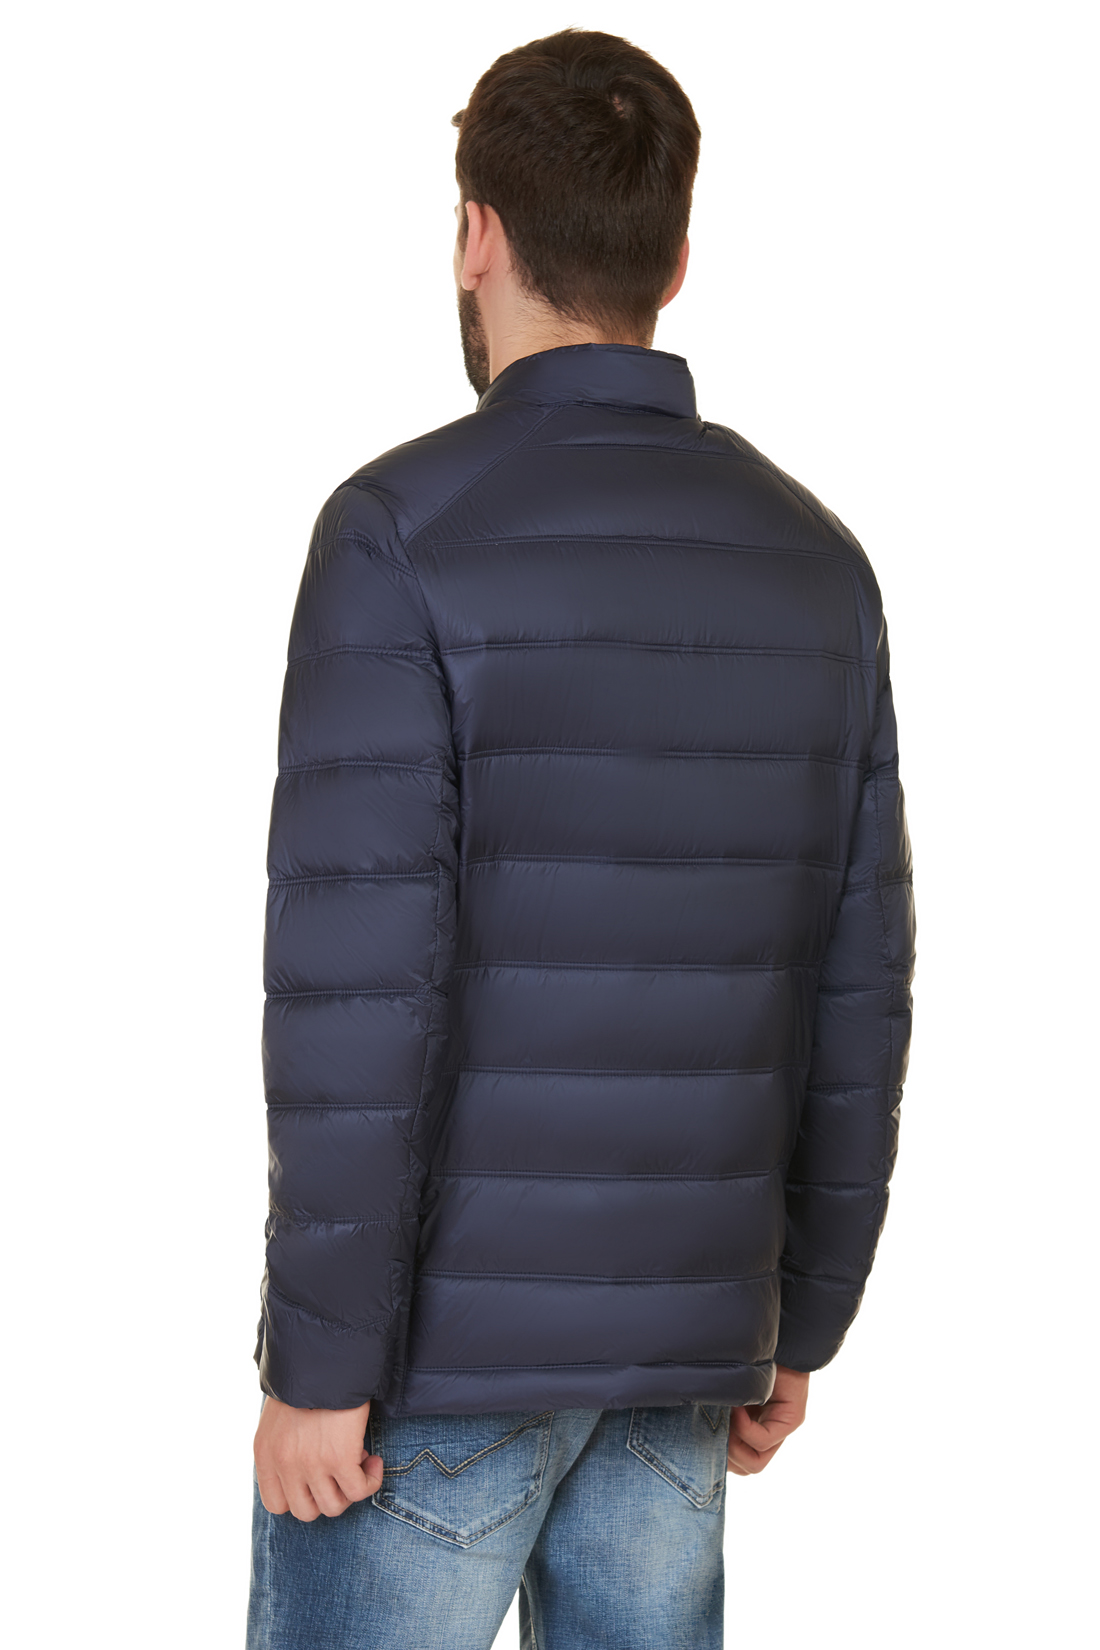 Куртка с прострочкой (арт. baon B537560), размер XL, цвет синий Куртка с прострочкой (арт. baon B537560) - фото 2